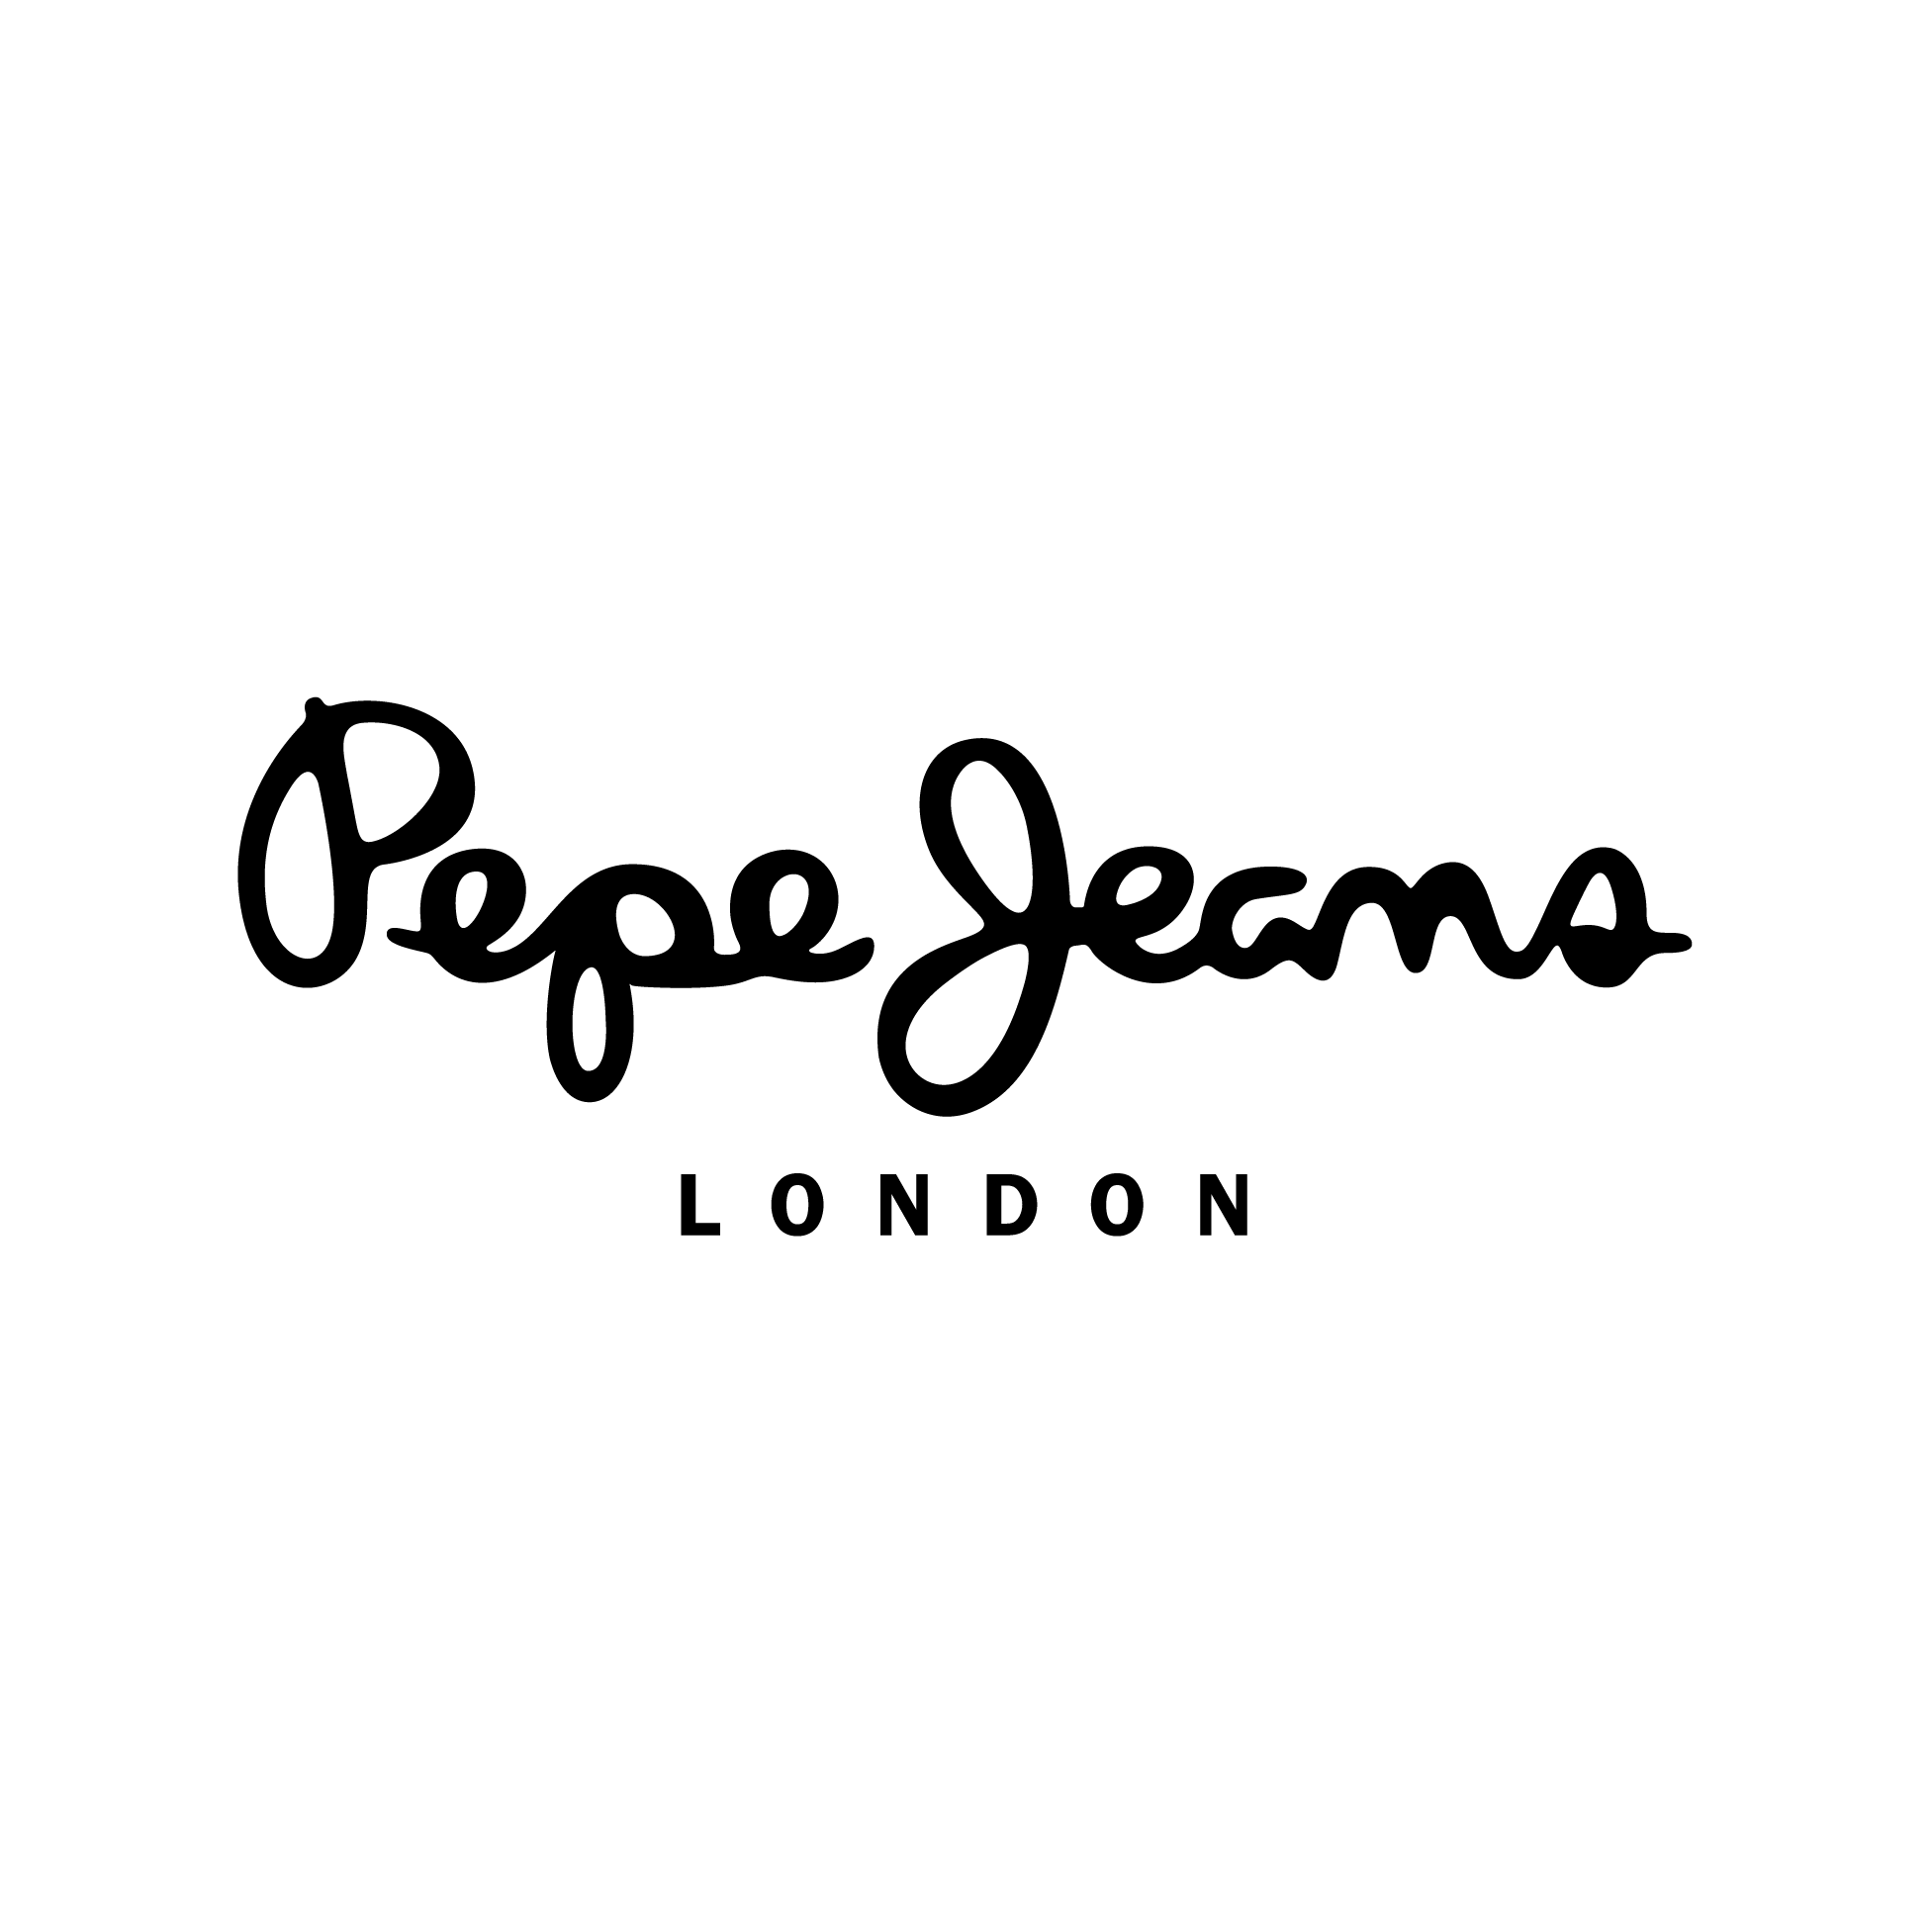 Pepe Jeans Vila Do Conde Fashion Outlet